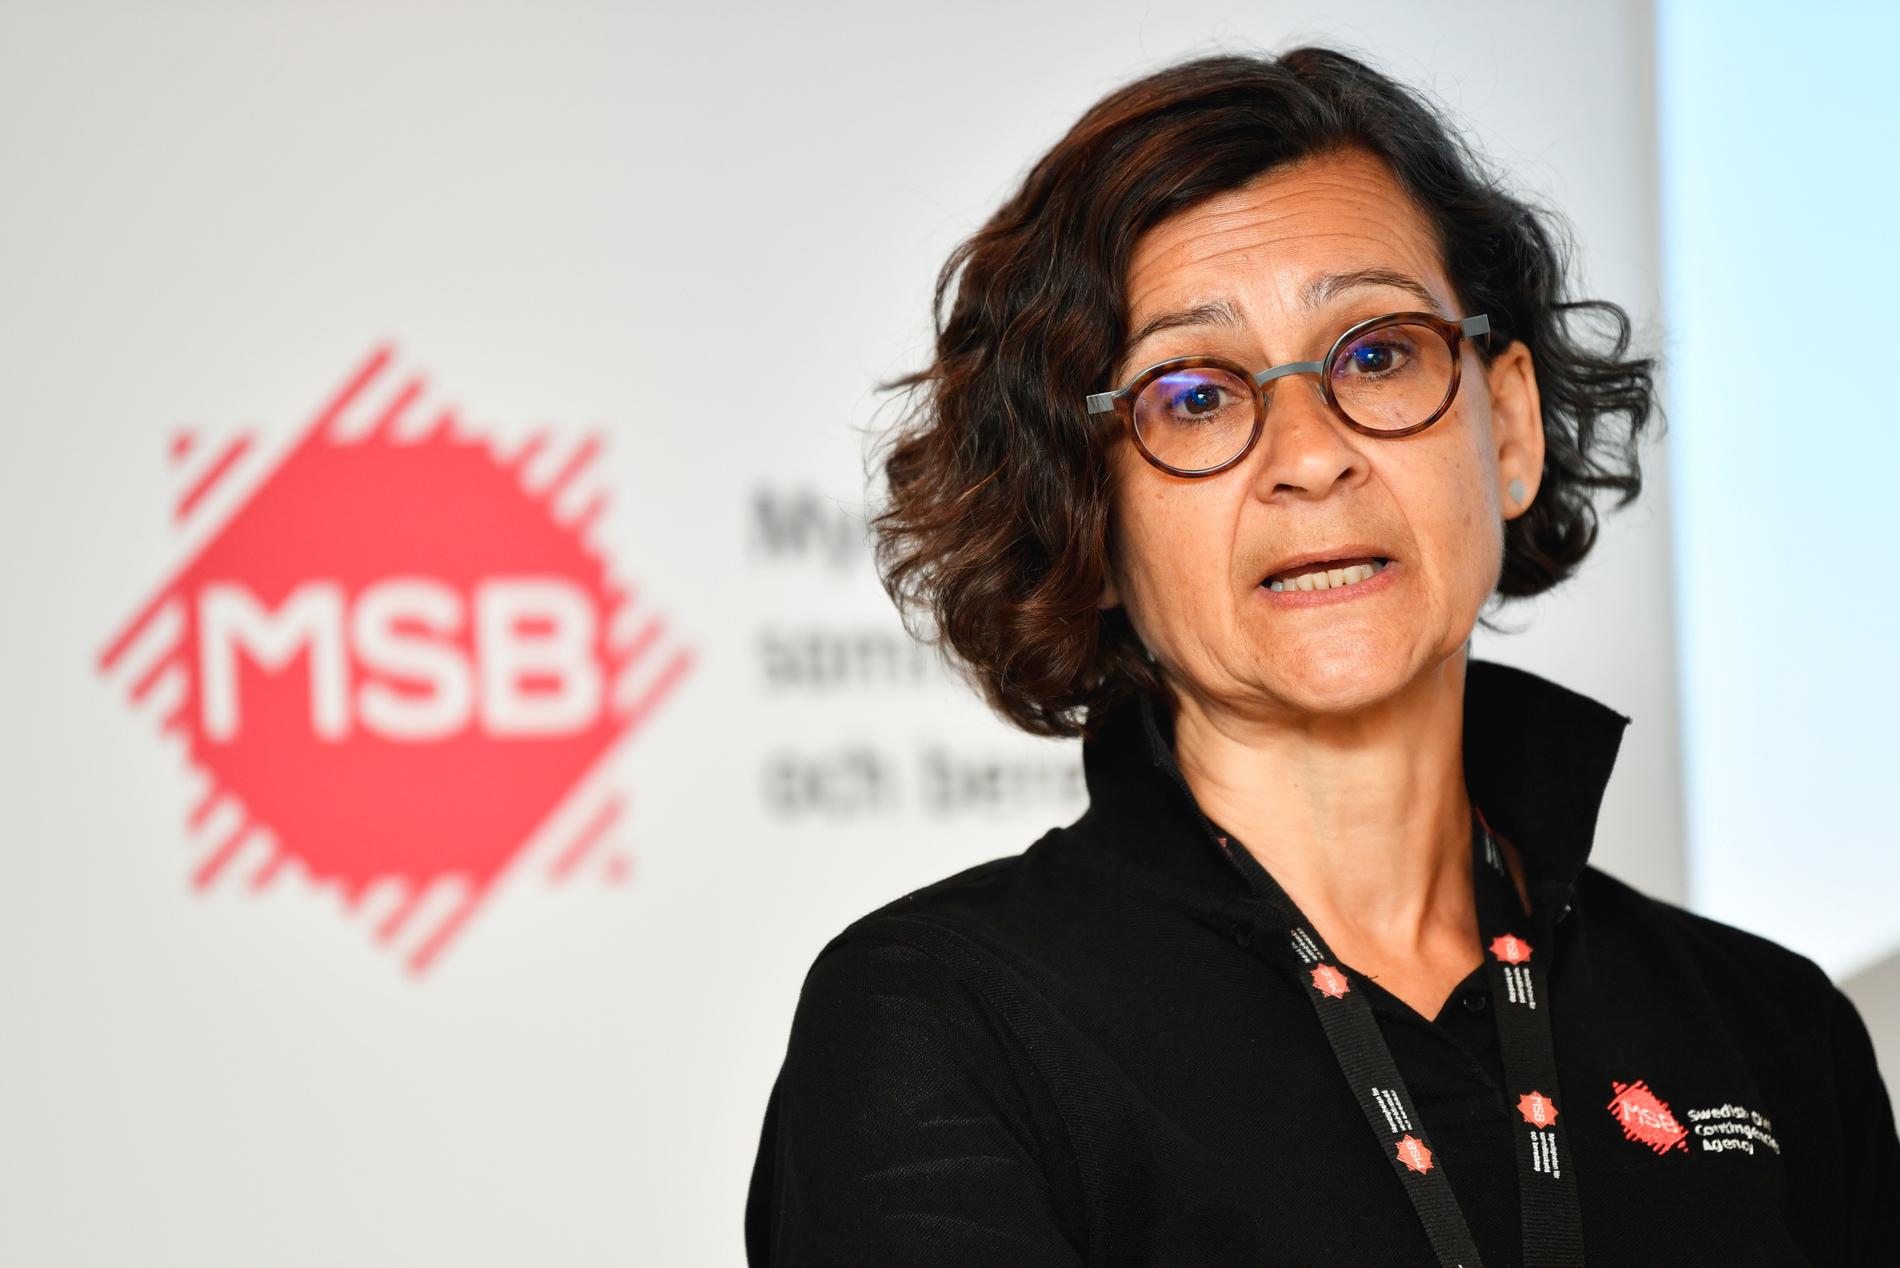  Anneli Bergholm Söder, chef på MSB:s operativa avdelning.